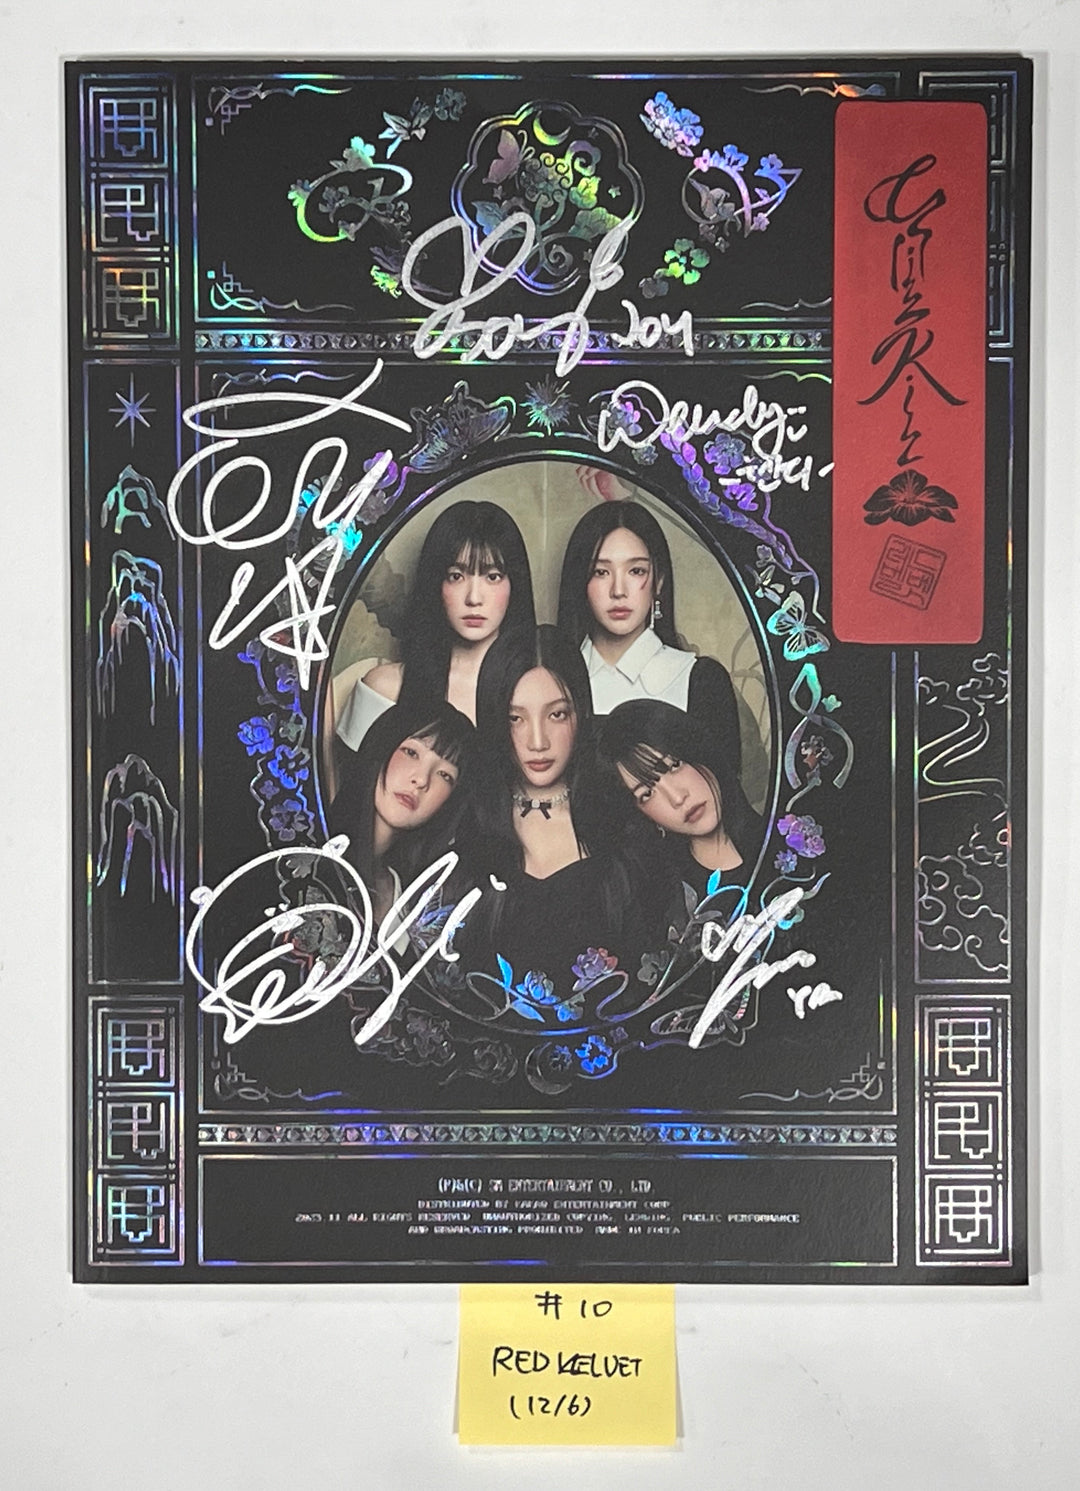 Aespa "Drama", Dreamcatcher "VillainS", Red Velvet "Chill Kill" - Hand Autographed(Signed) Promo Album [23.12.06]